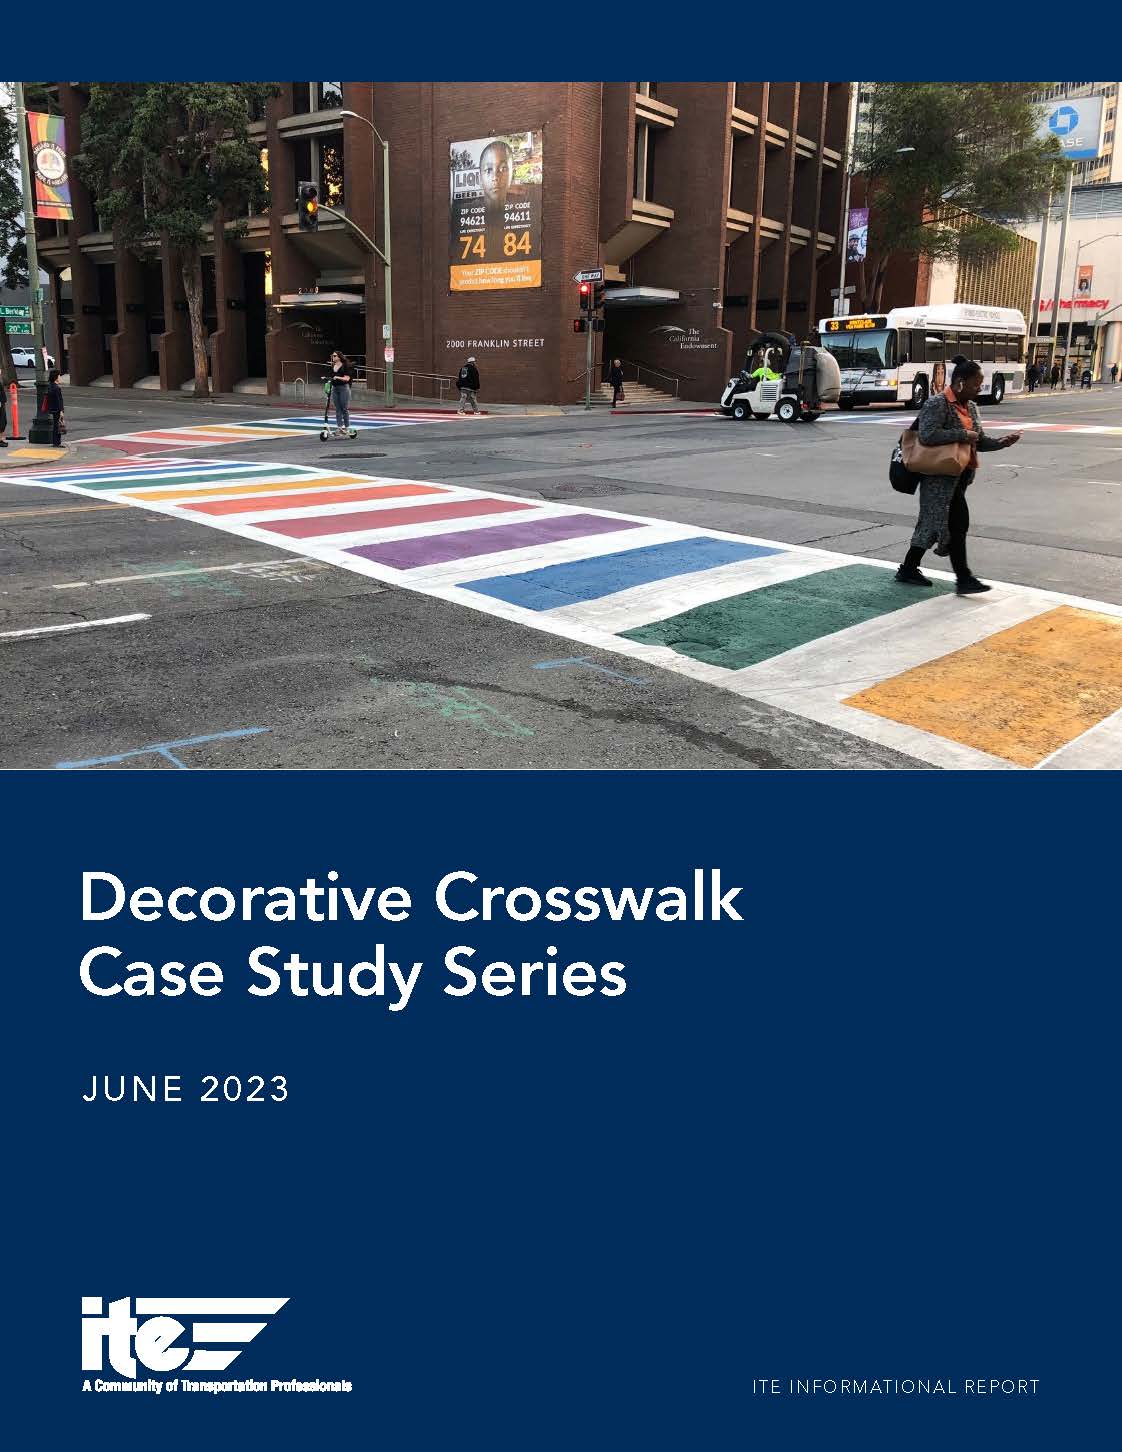 Decorative Crosswalk Case Studies-ITE Informational Report